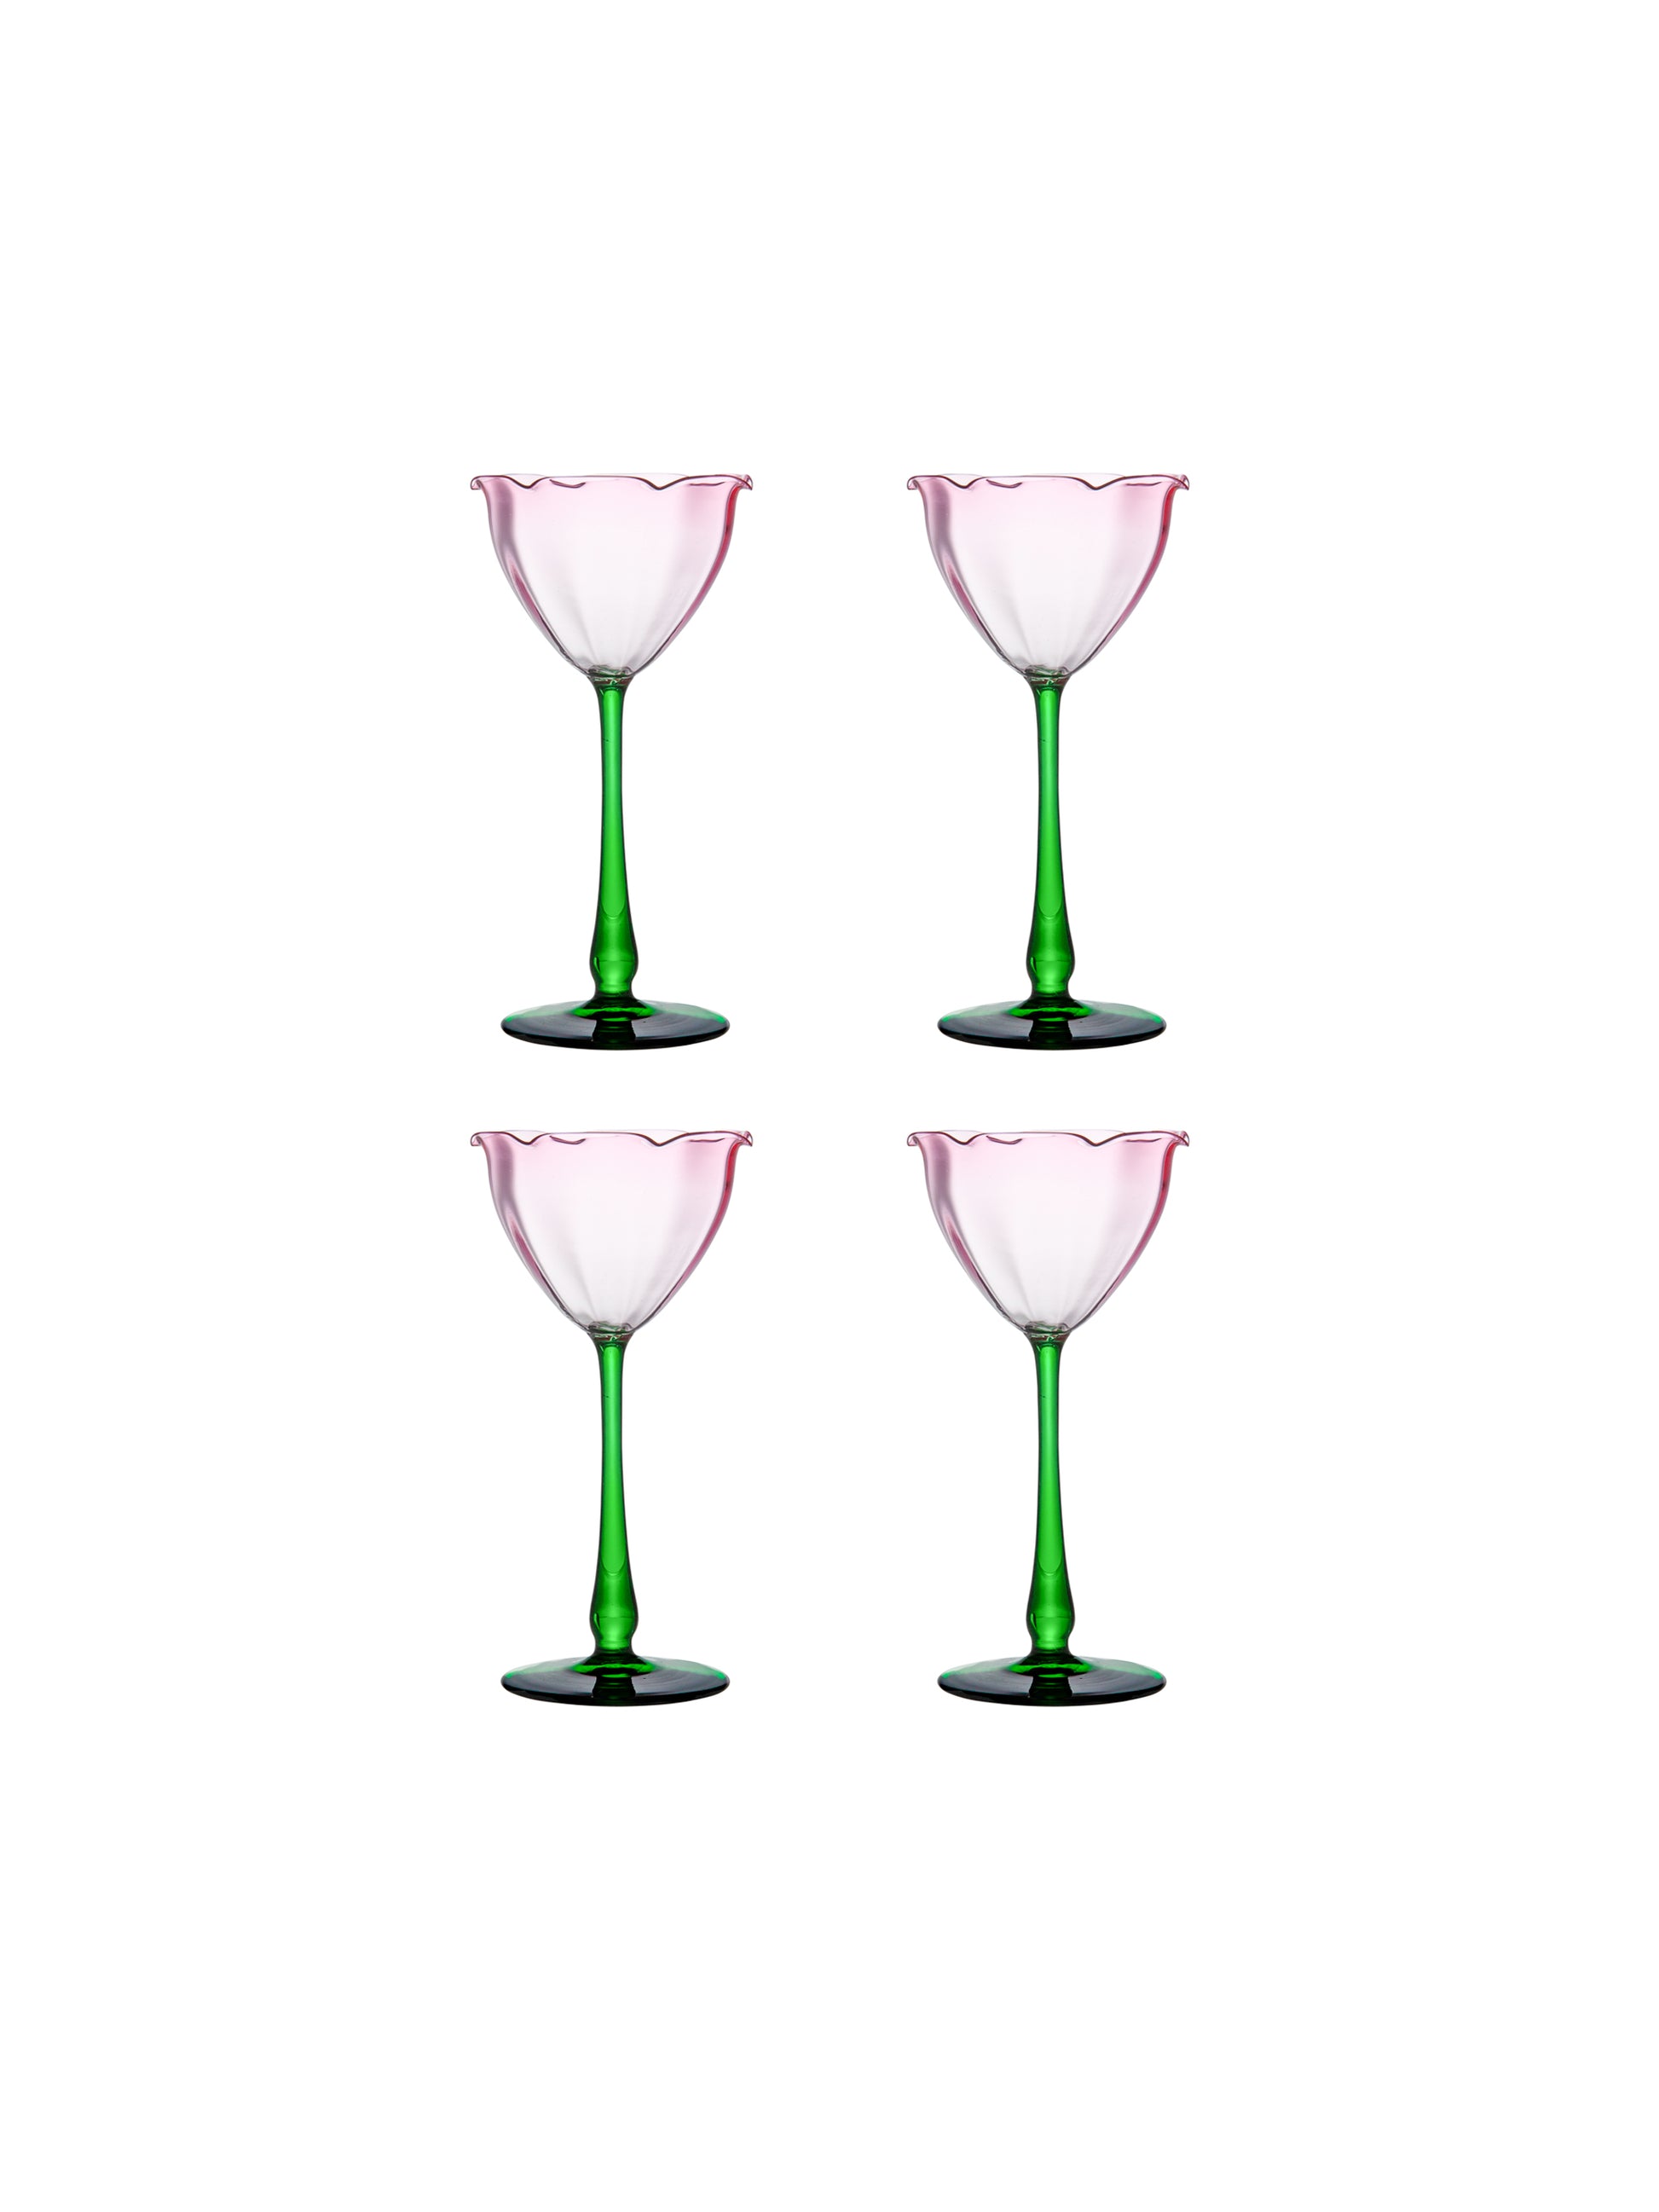 Vintage Depression Glass Pink Cocktail Tumbler Glasses, The Hour Shop